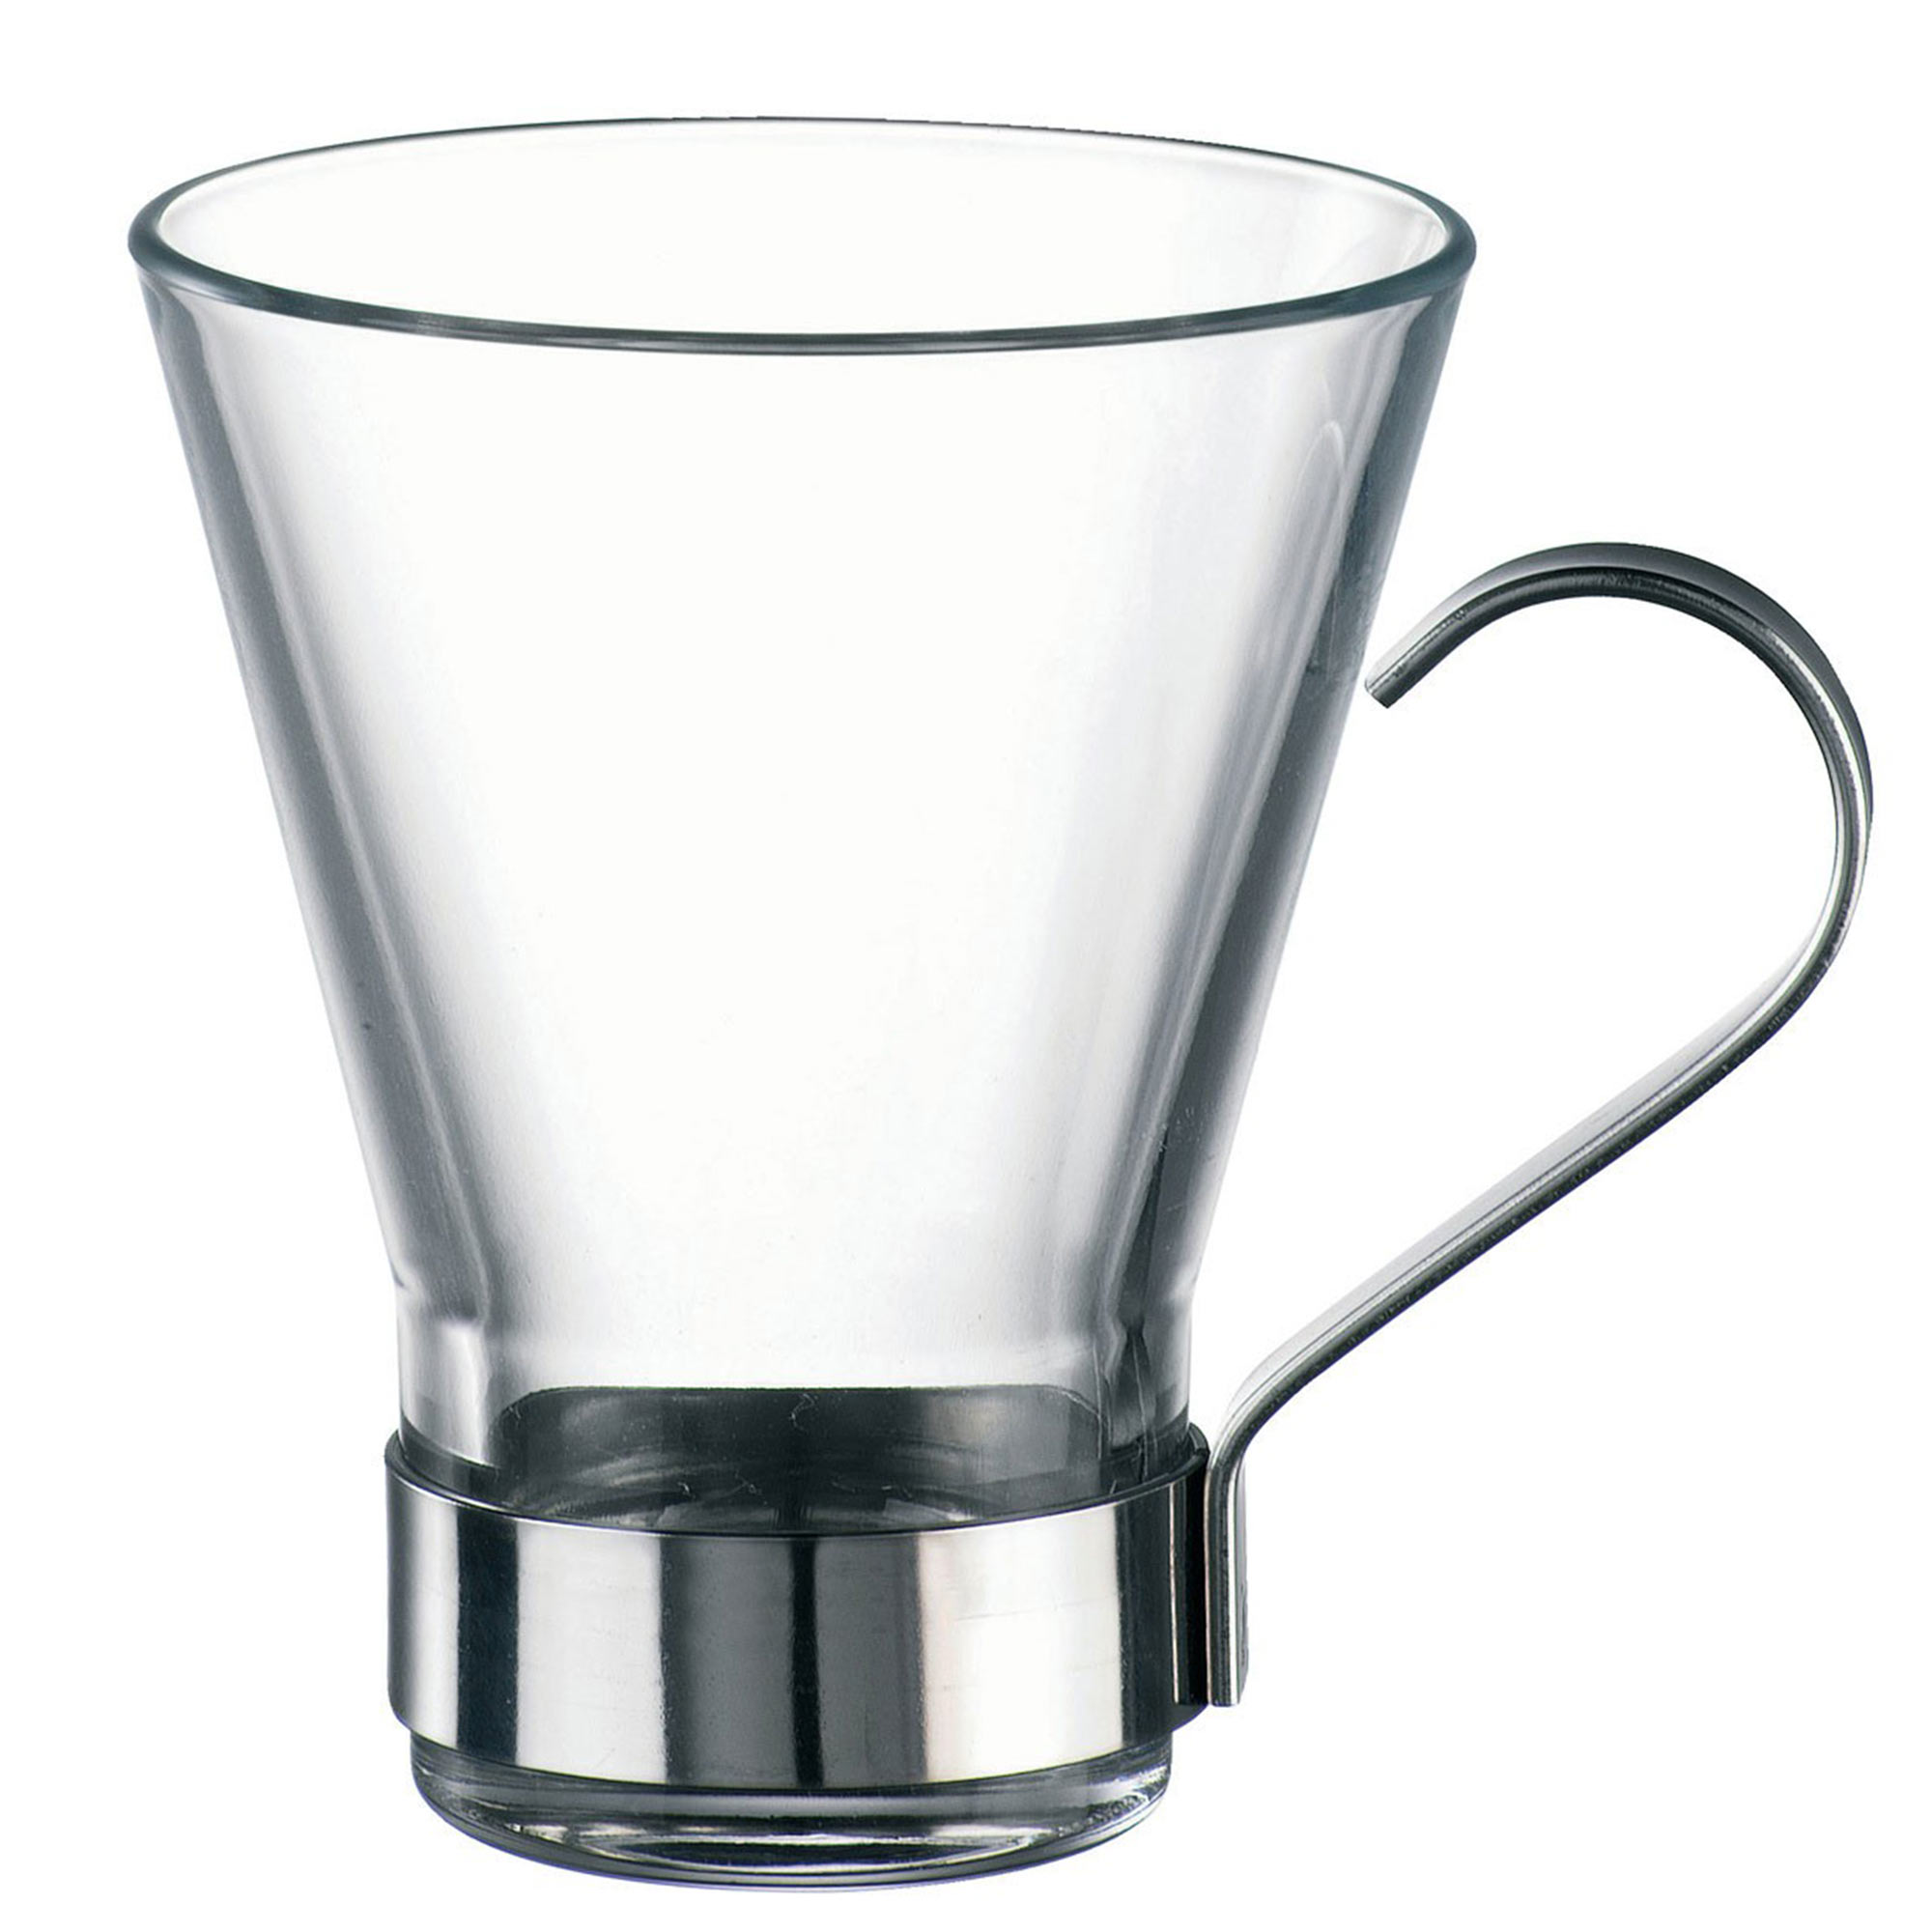 Ypsilon Glass Cappuccino Cup 7.75oz / 220ml